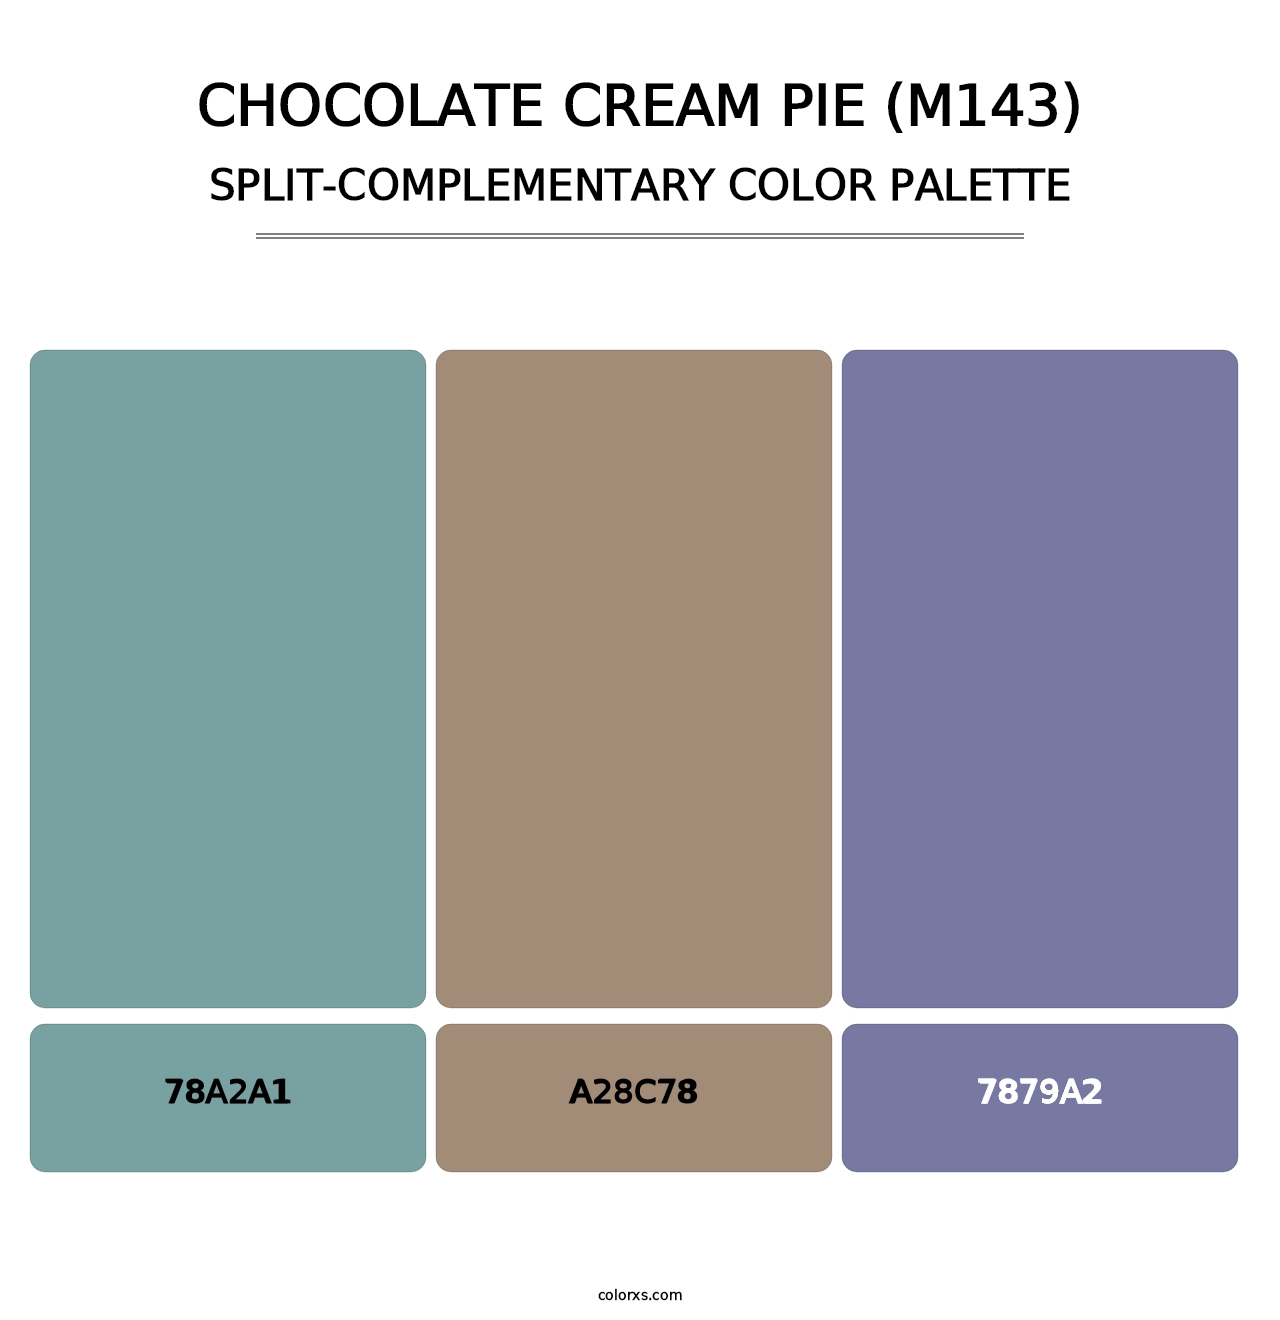 Chocolate Cream Pie (M143) - Split-Complementary Color Palette